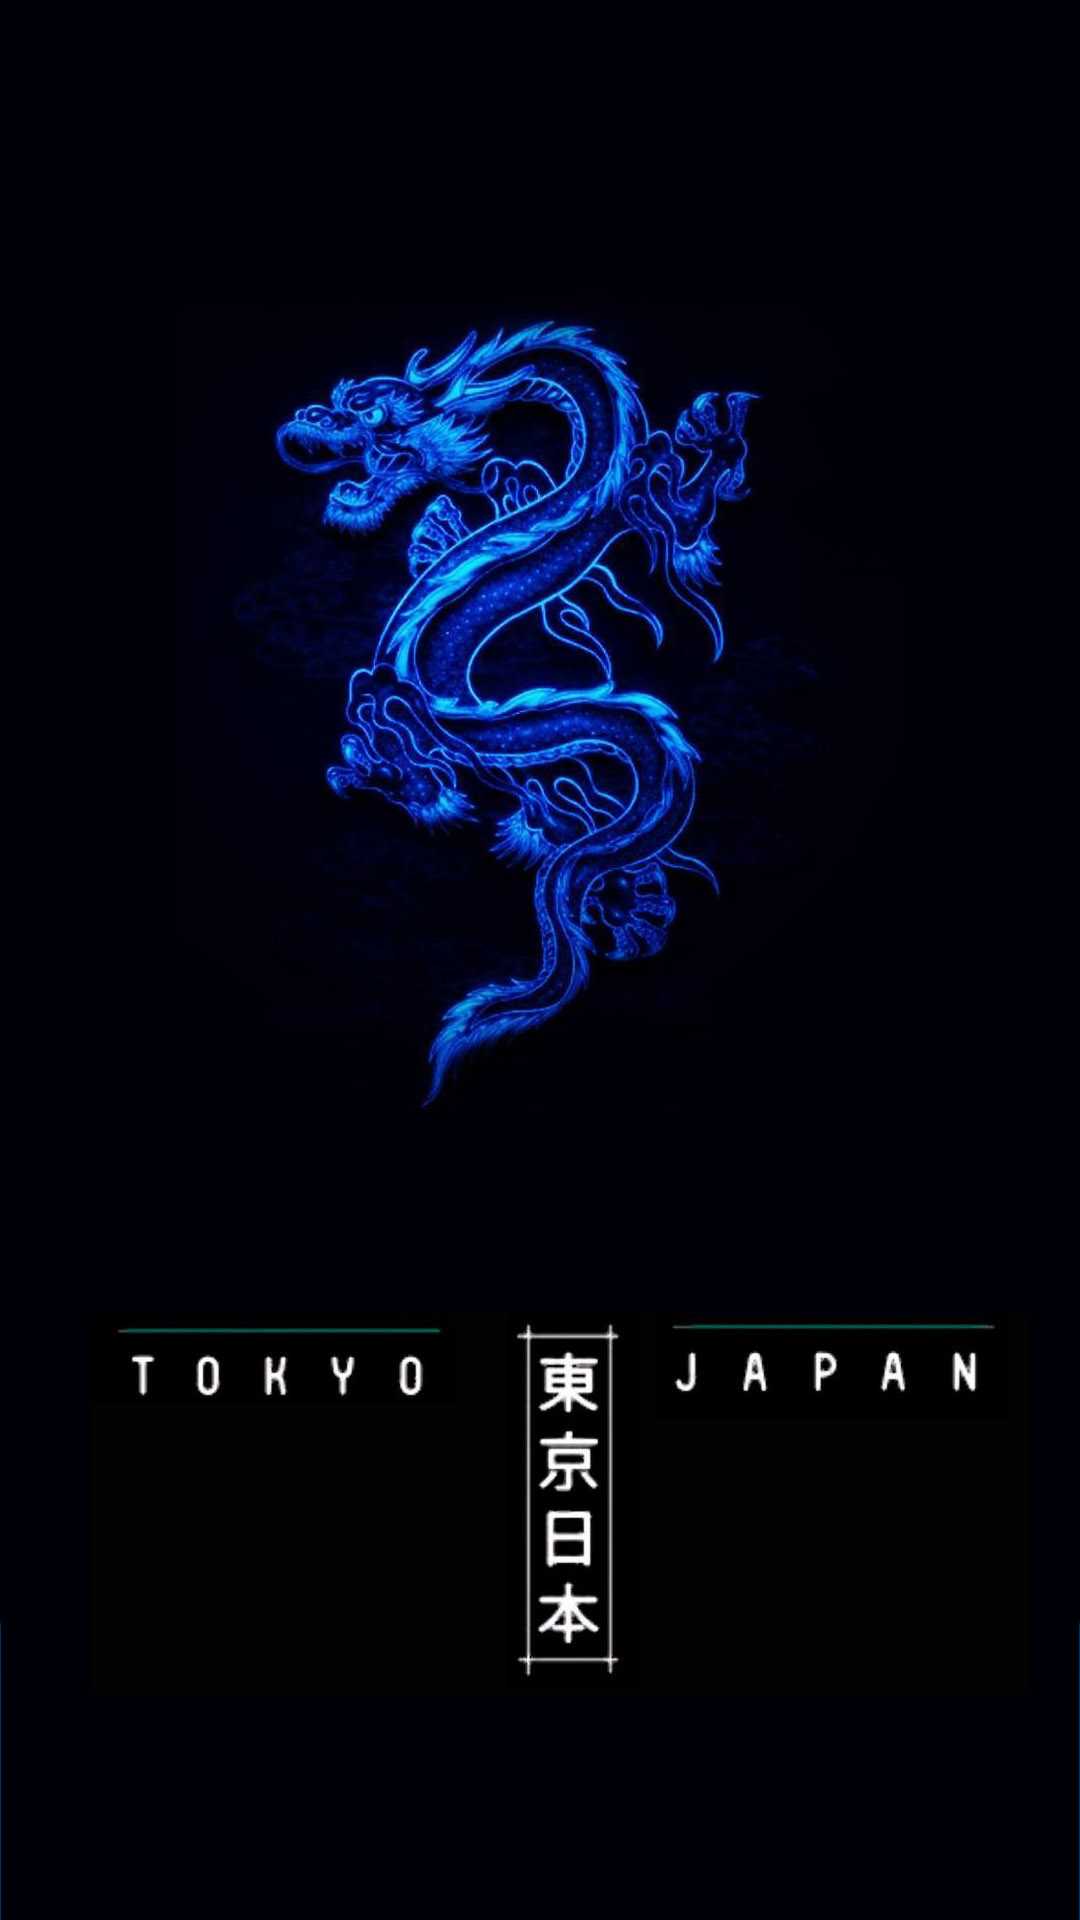 Tokyo Japan Dragon - KoLPaPer - Awesome Free HD Wallpapers